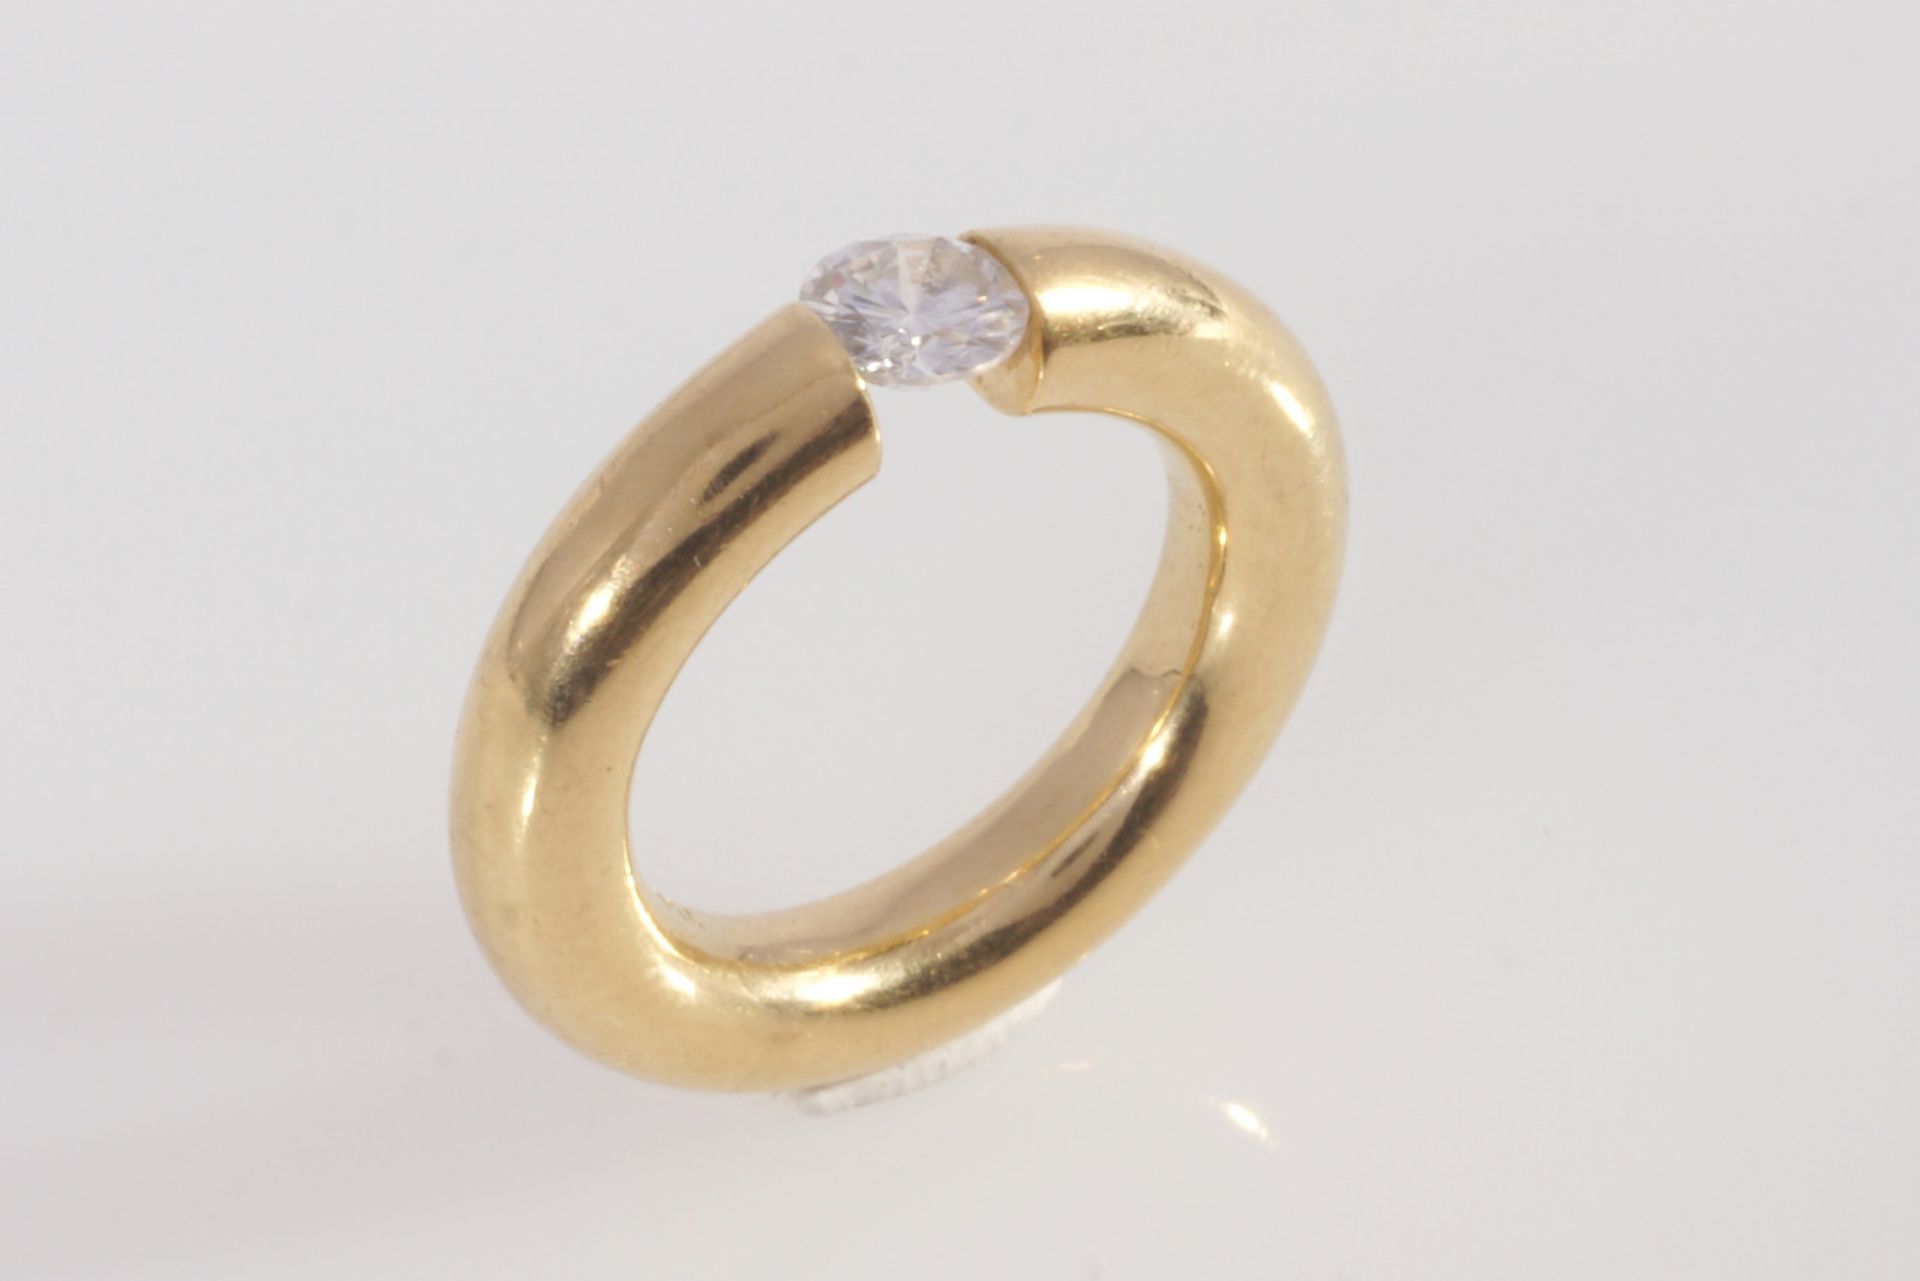 750 Gold Spannring mit Brillant 0,75ct, Niessing Art, Solitärring, 18K gold clamping ring diamond, - Bild 3 aus 4